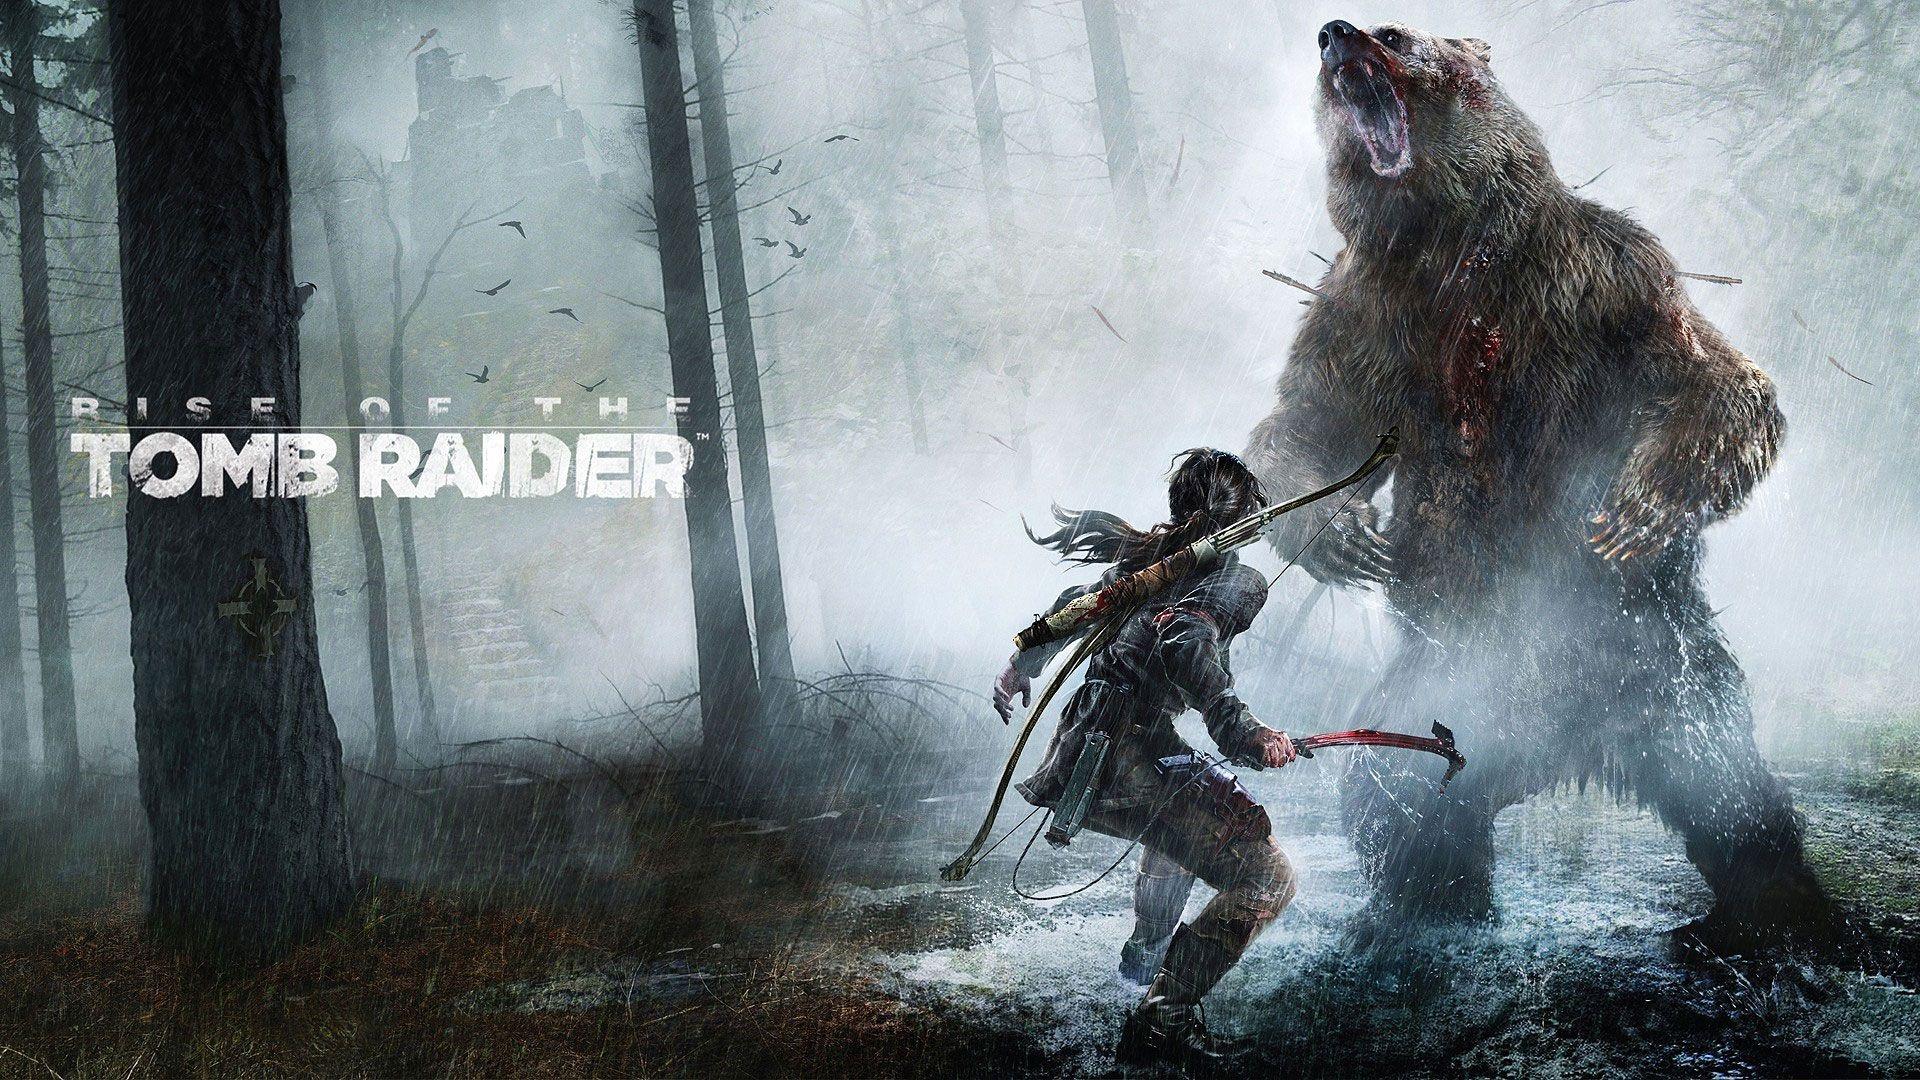 Rise of the Tomb Raider Wallpaper in Ultra HDK